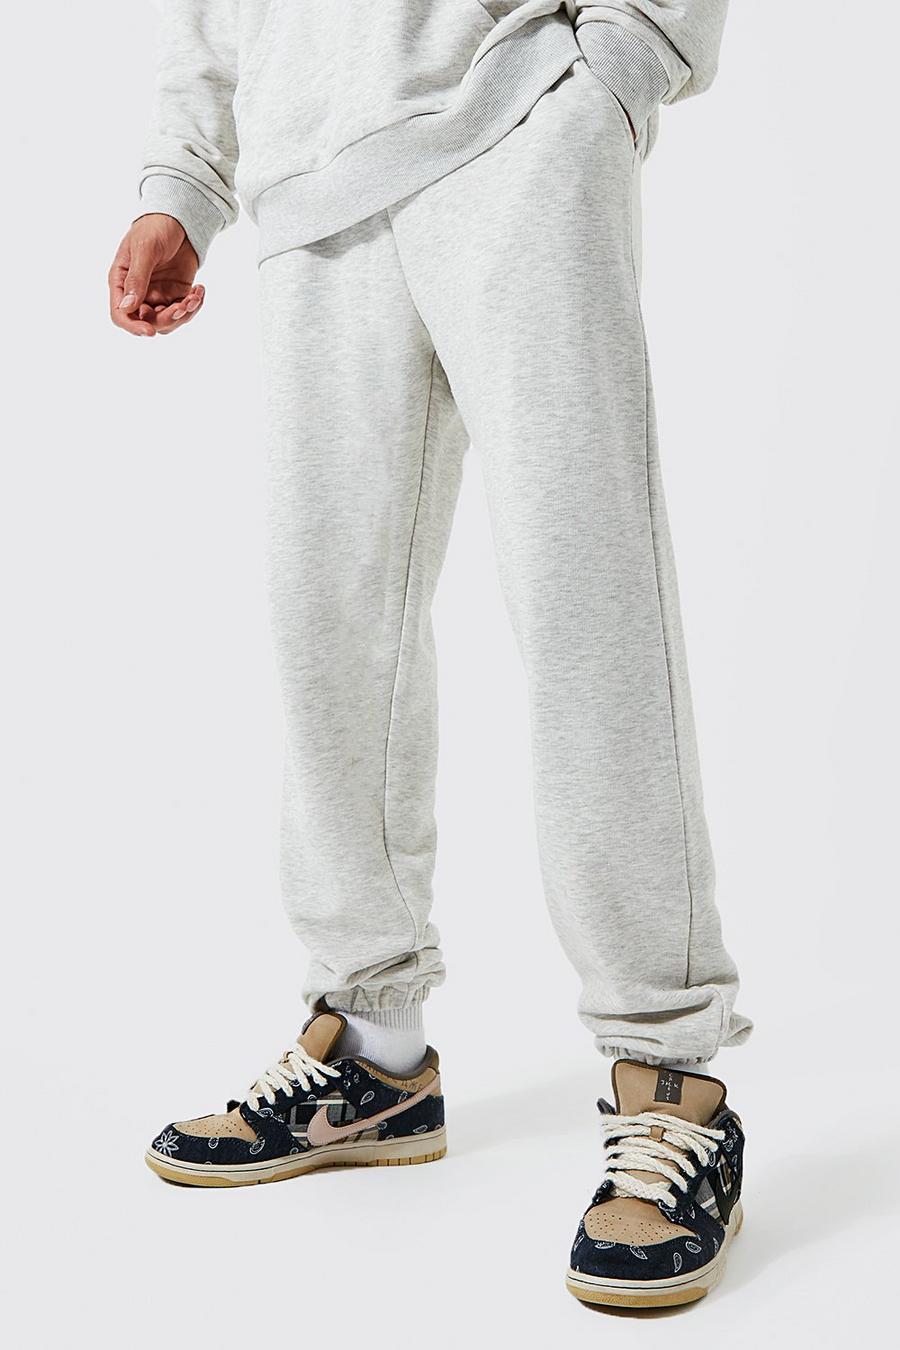 Pantalón deportivo Tall Regular jaspeado color crudo, Ecru blanco